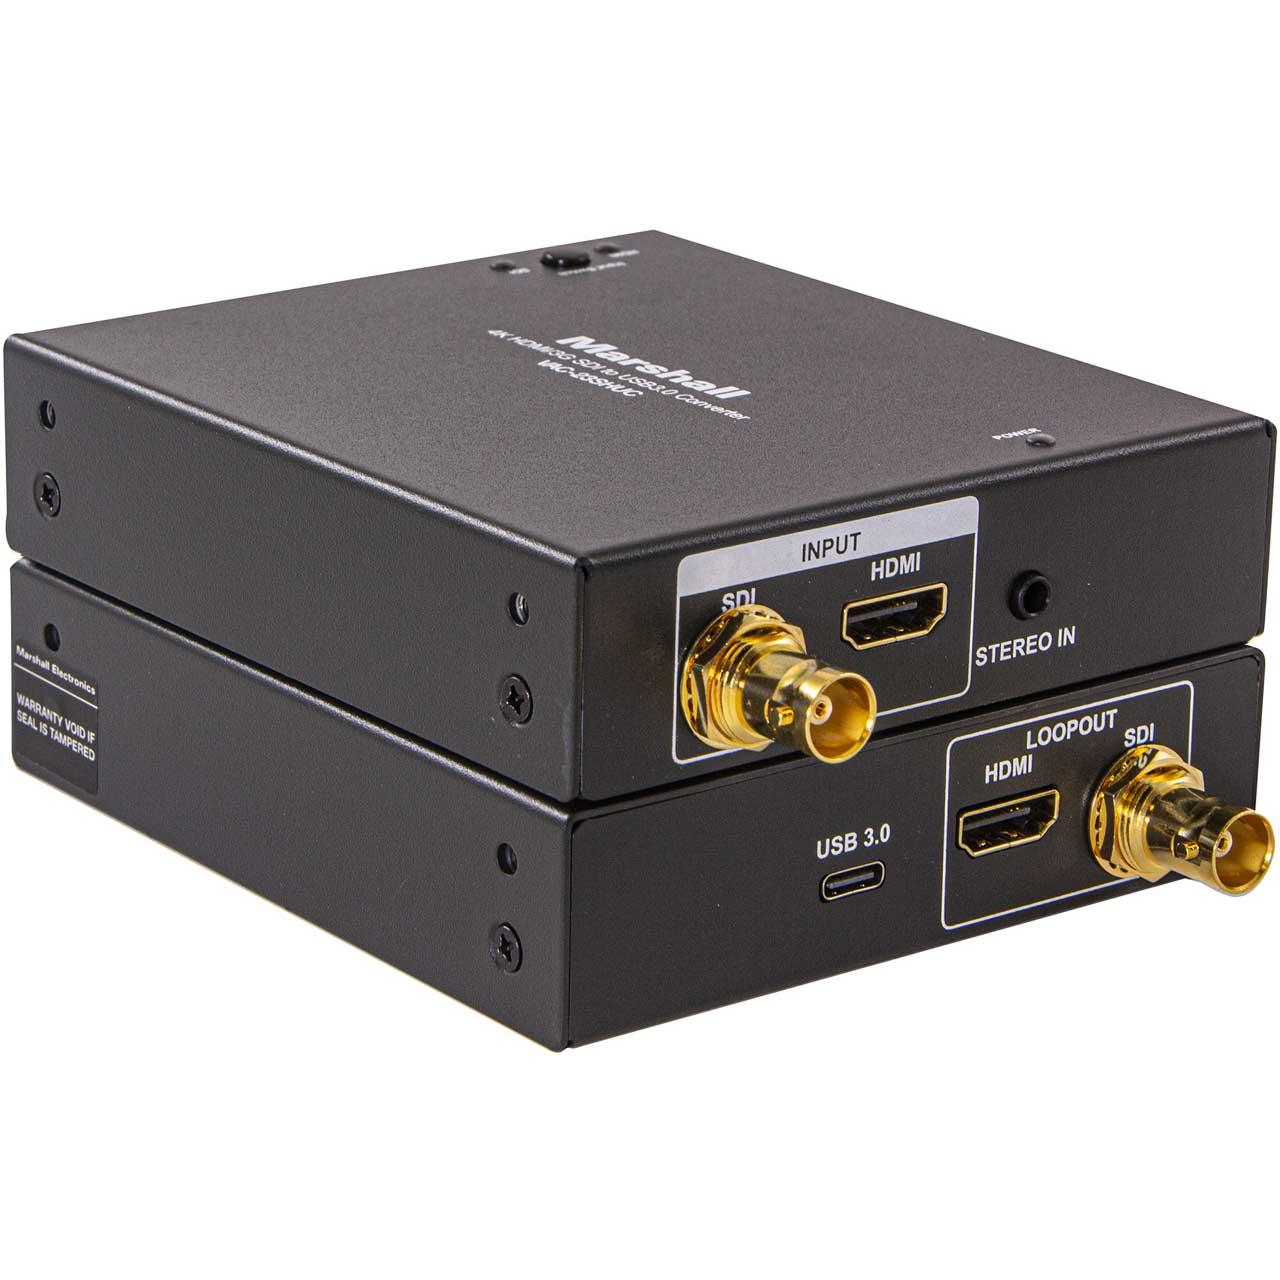 Marshall VAC-23SHUC 4K HDMI/3G-SDI to USB 3.0 - Encoder - Capture Device